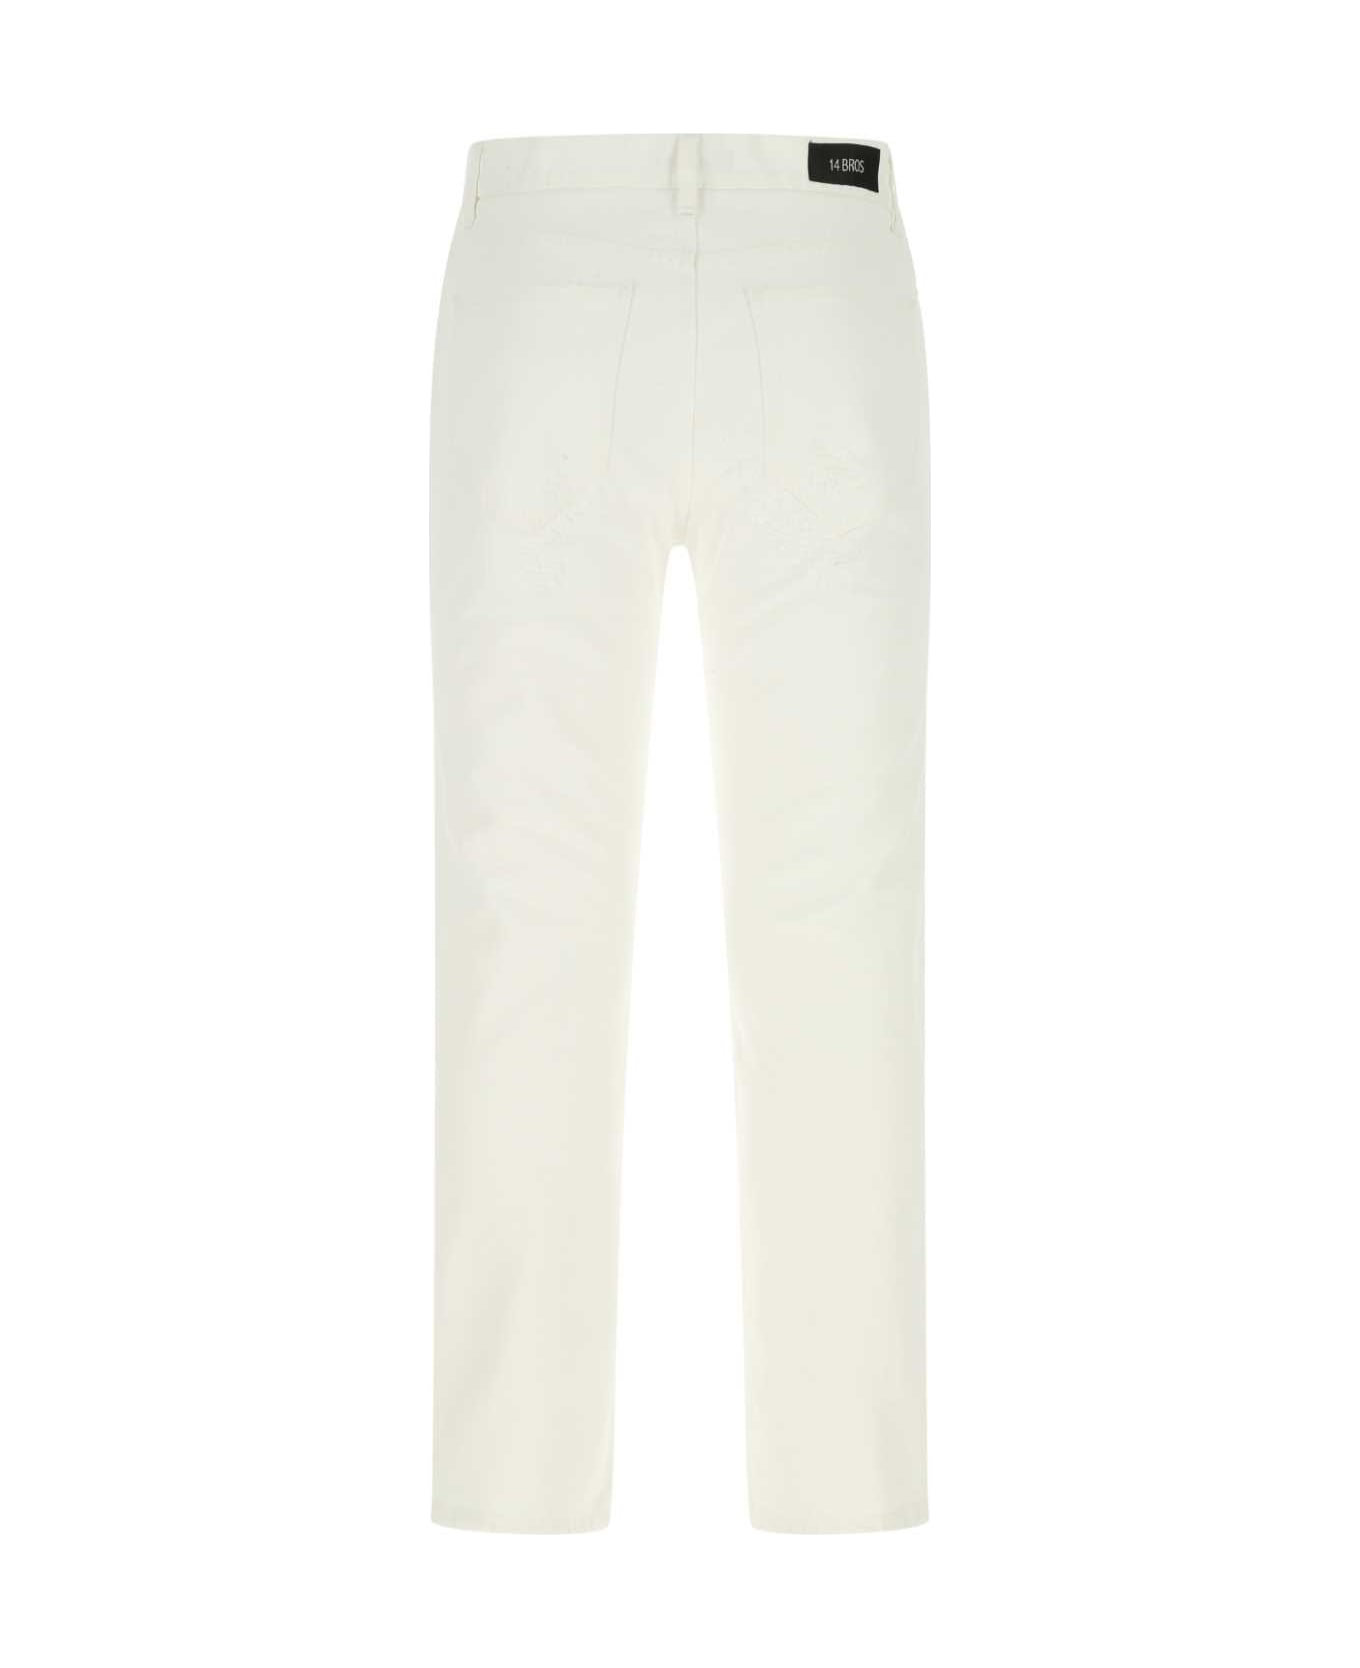 14 Bros White Denim Cheswick Jeans - 001